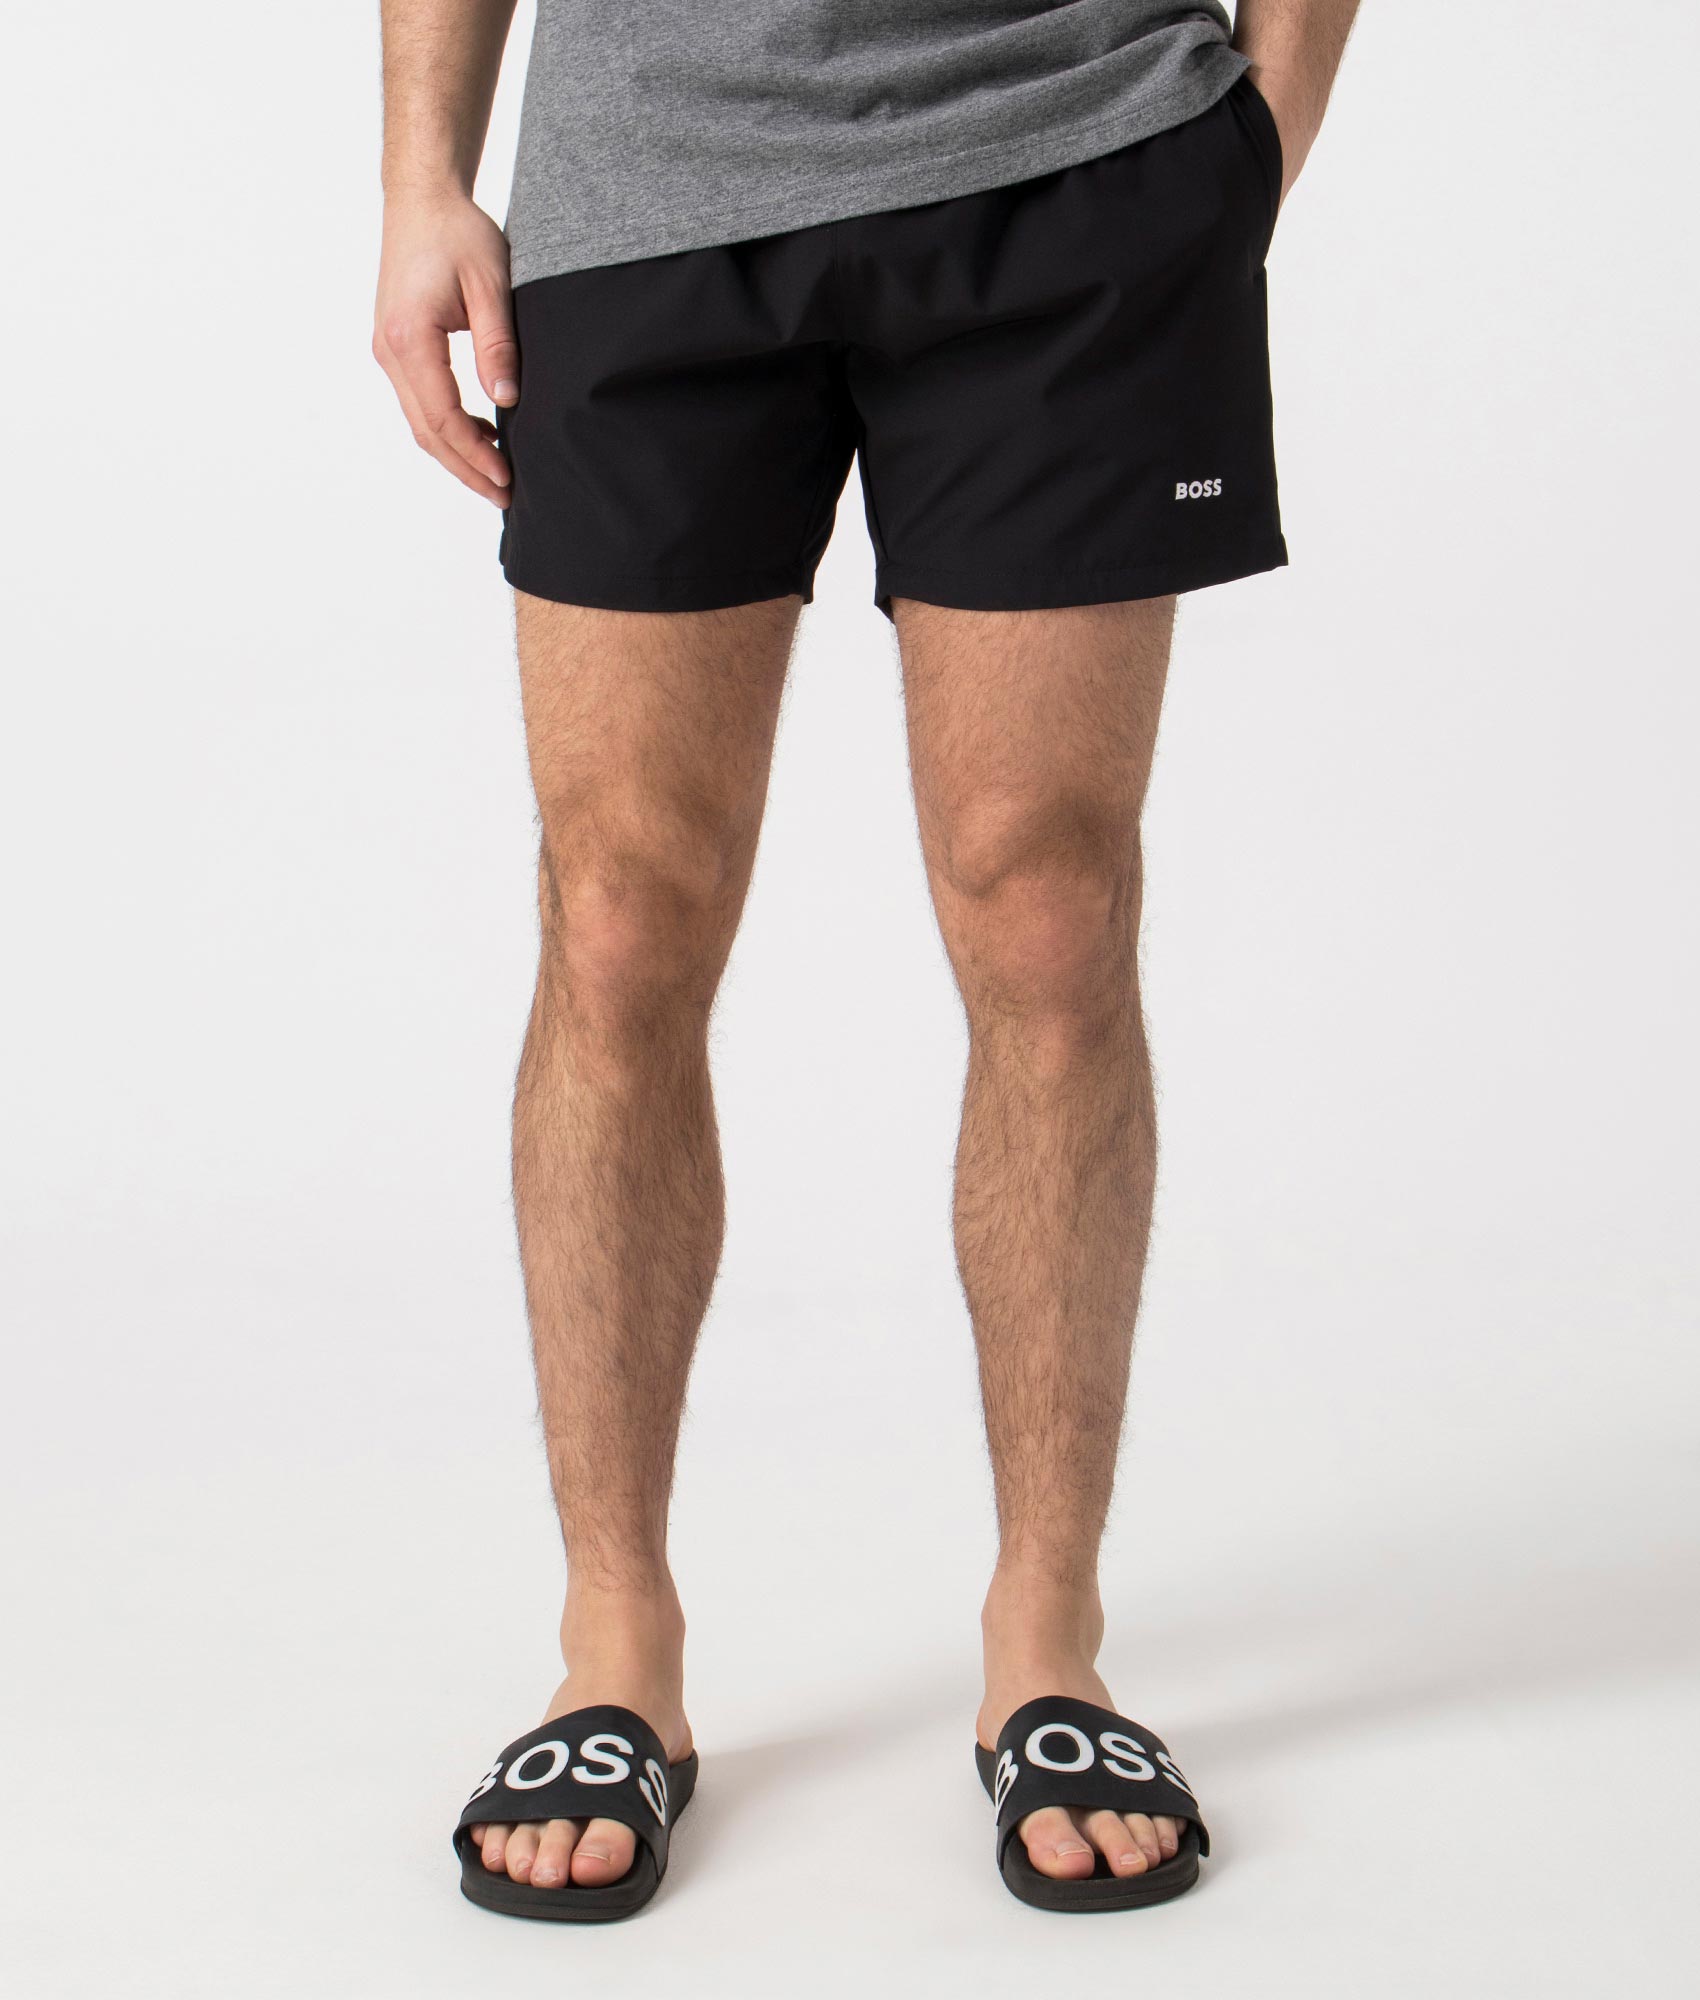 BOSS Mens Tio Swim Shorts - Colour: 001 Black - Size: Medium